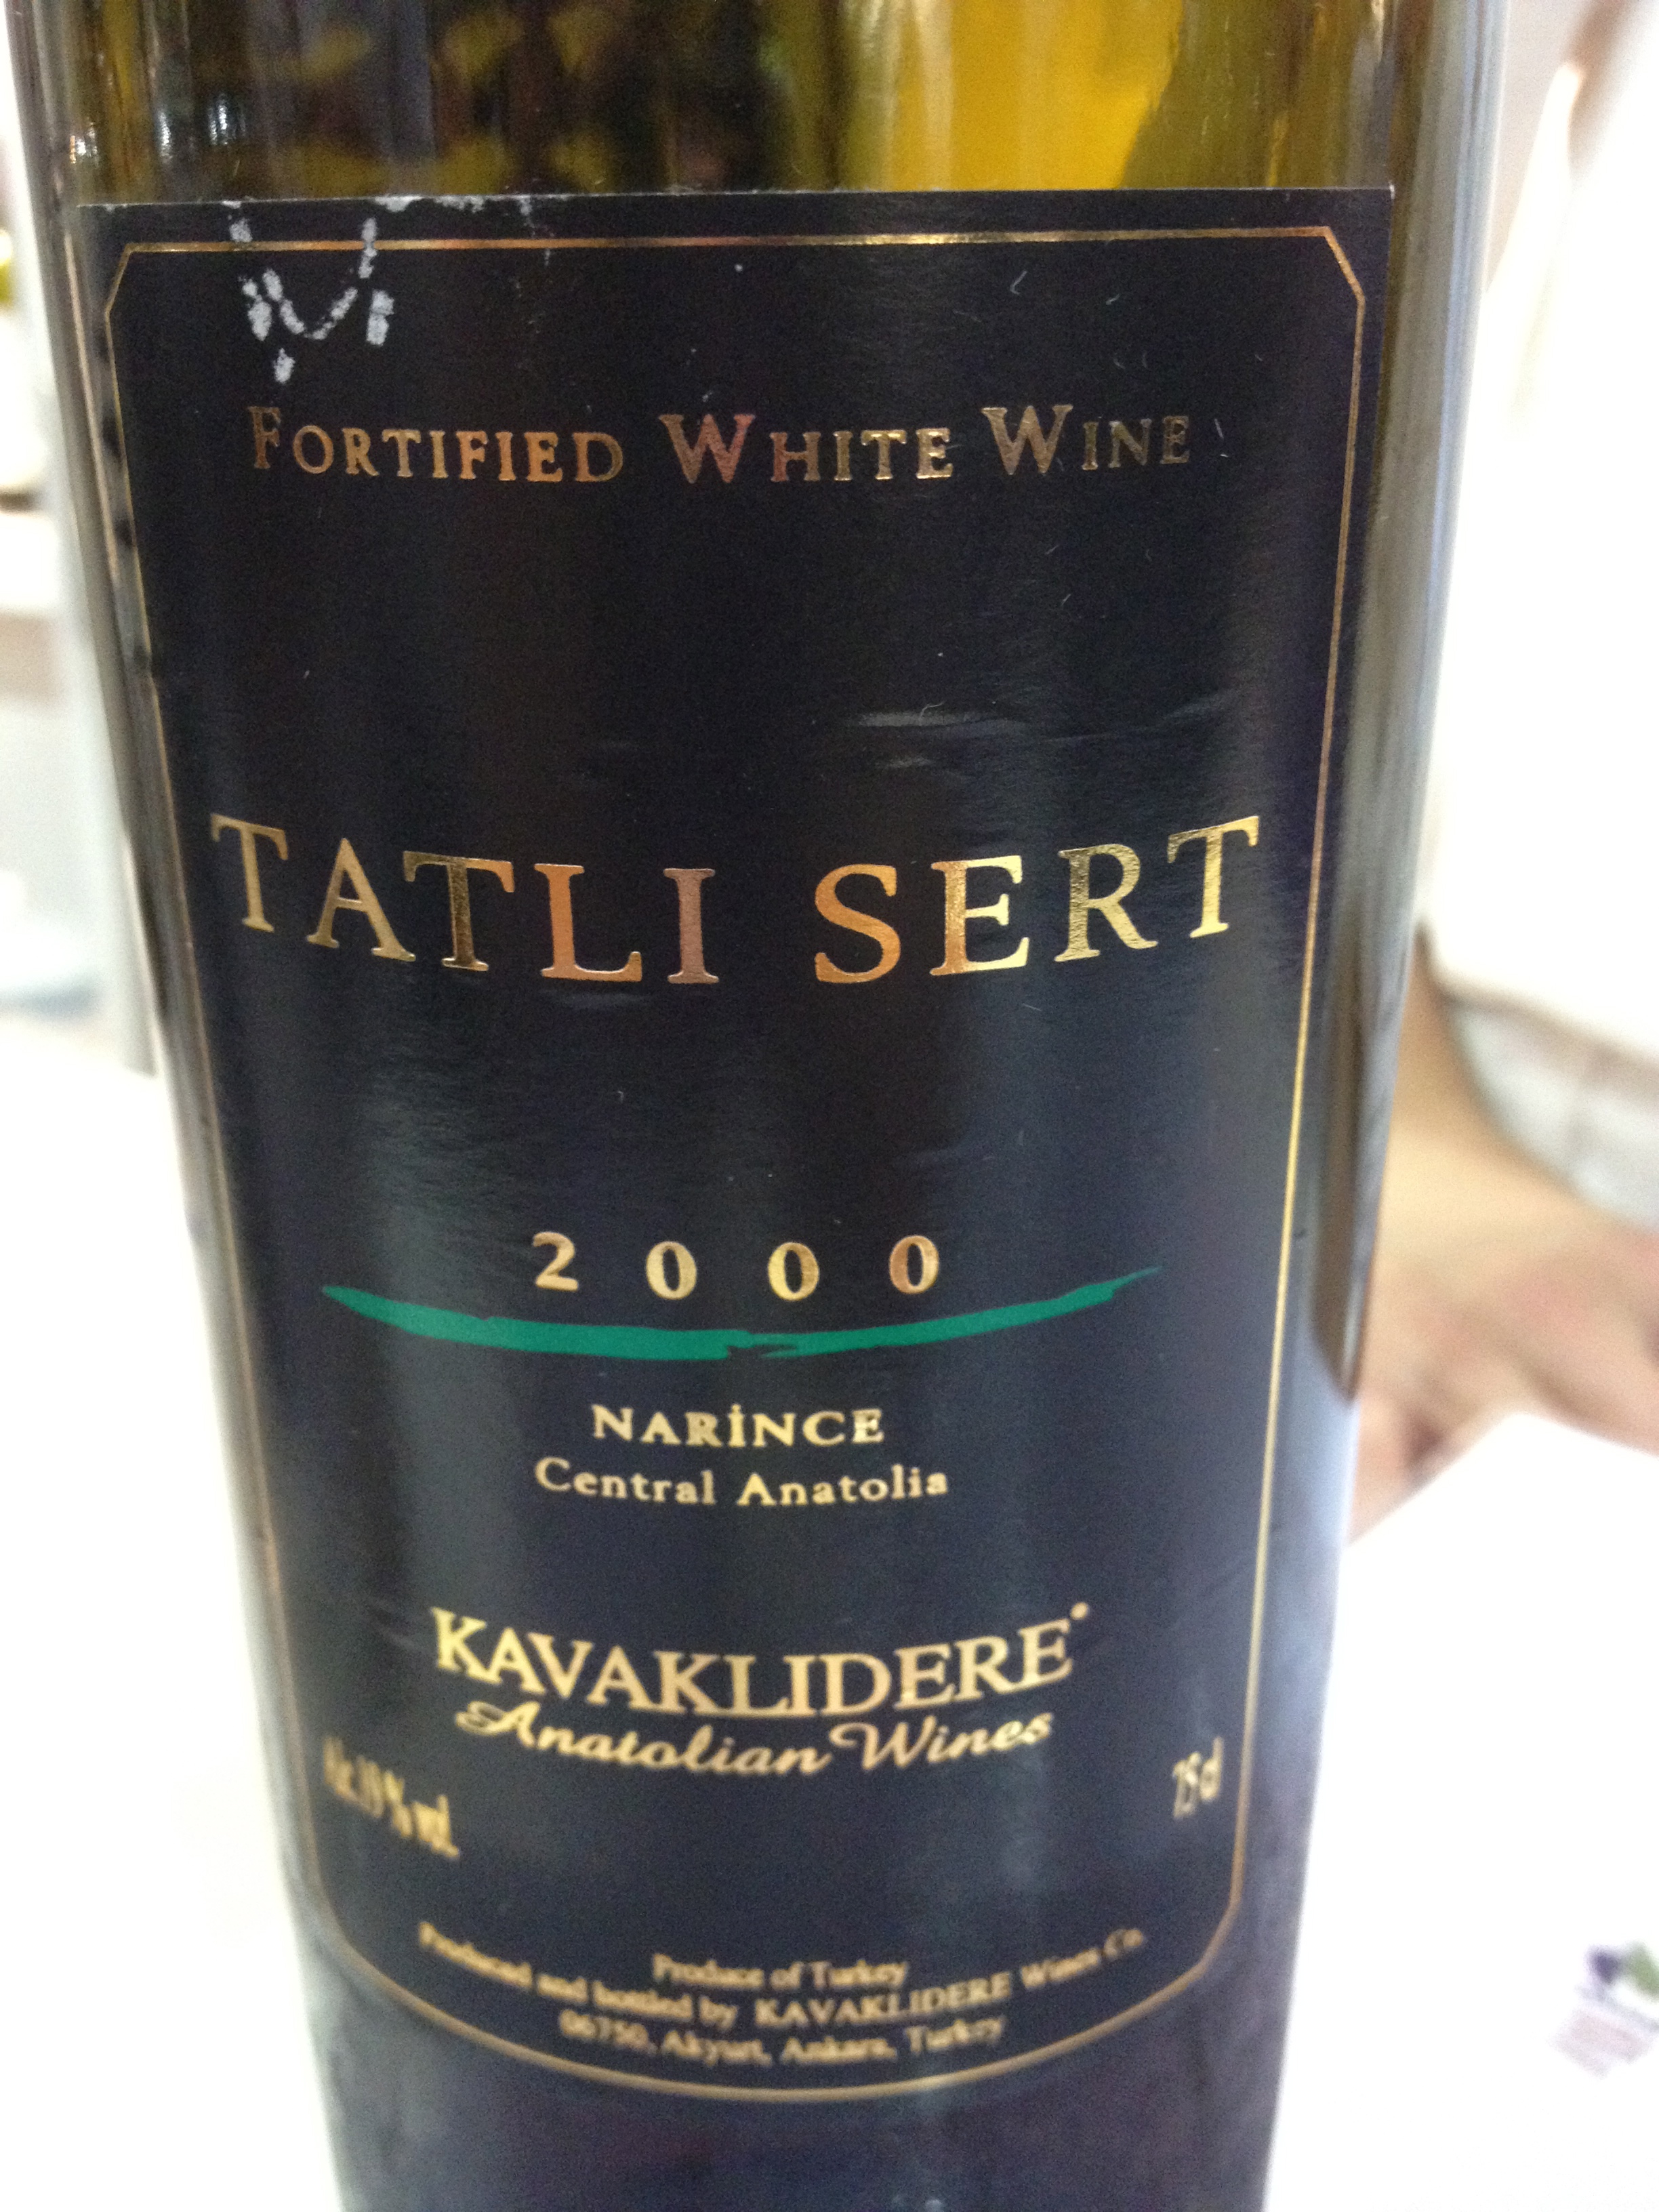 Tatli Sert fortified wine from Narince